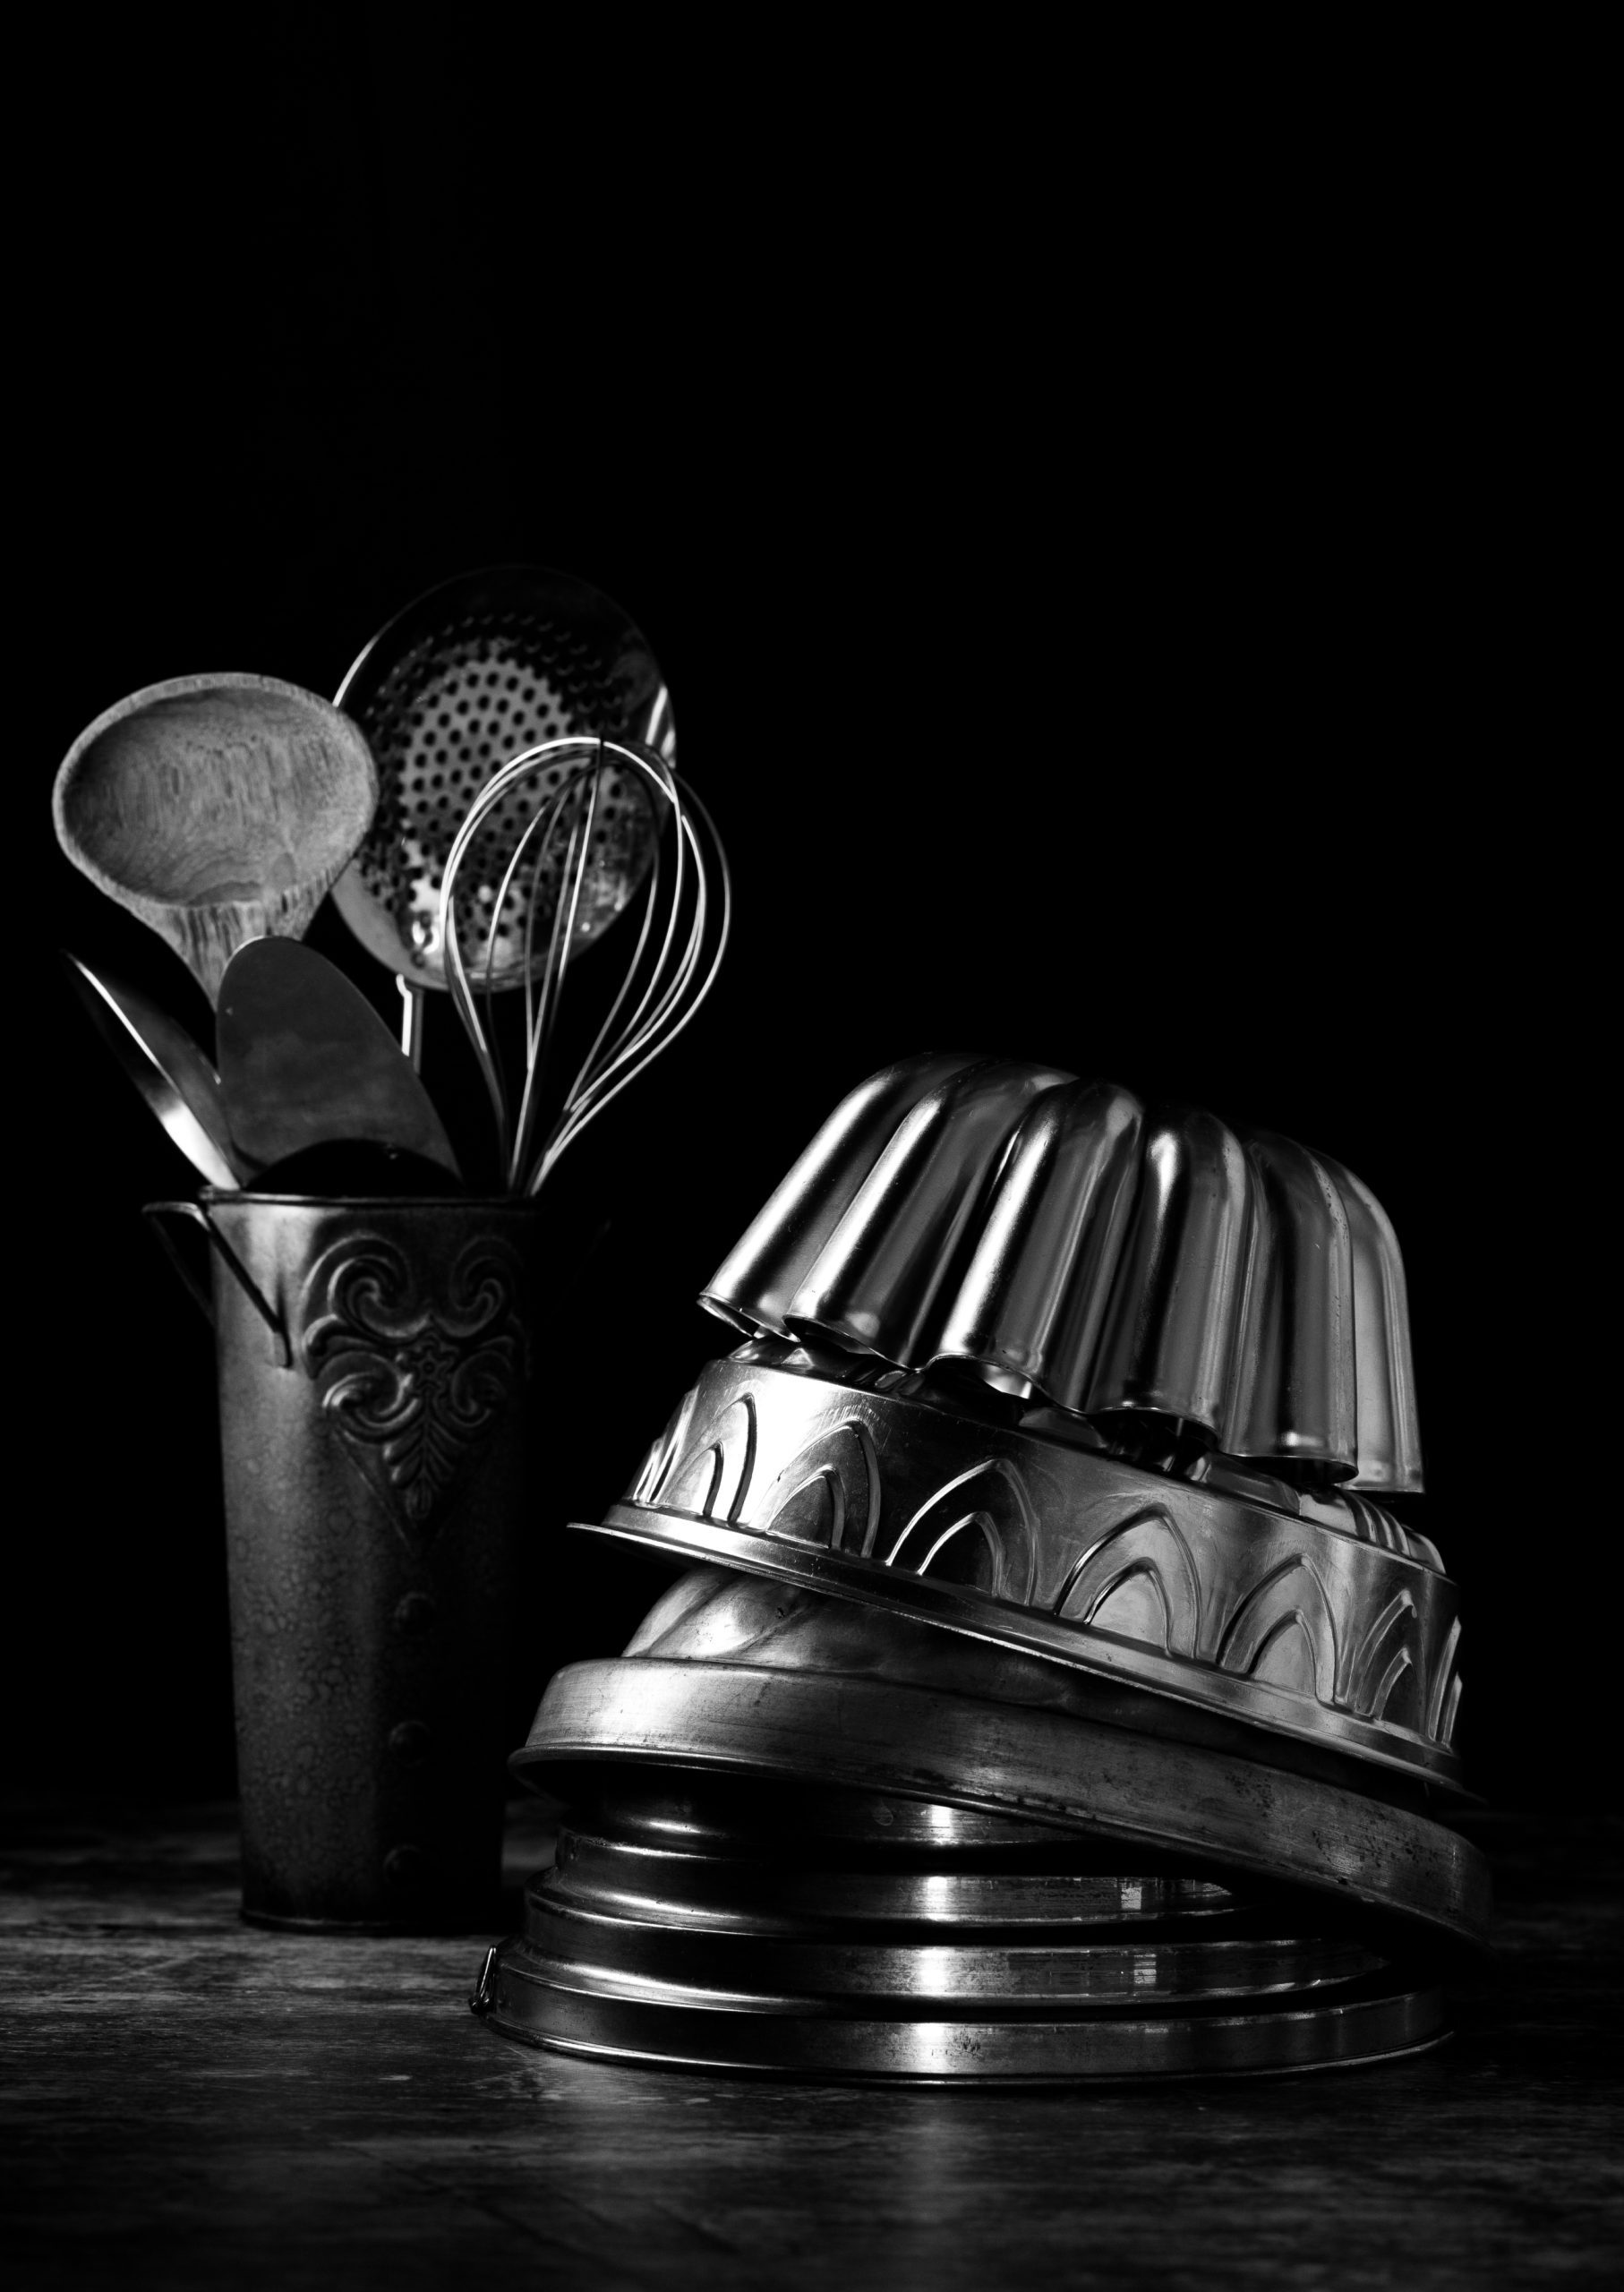 Assorted vintage baking pans and kitchen utensils in monochrome.